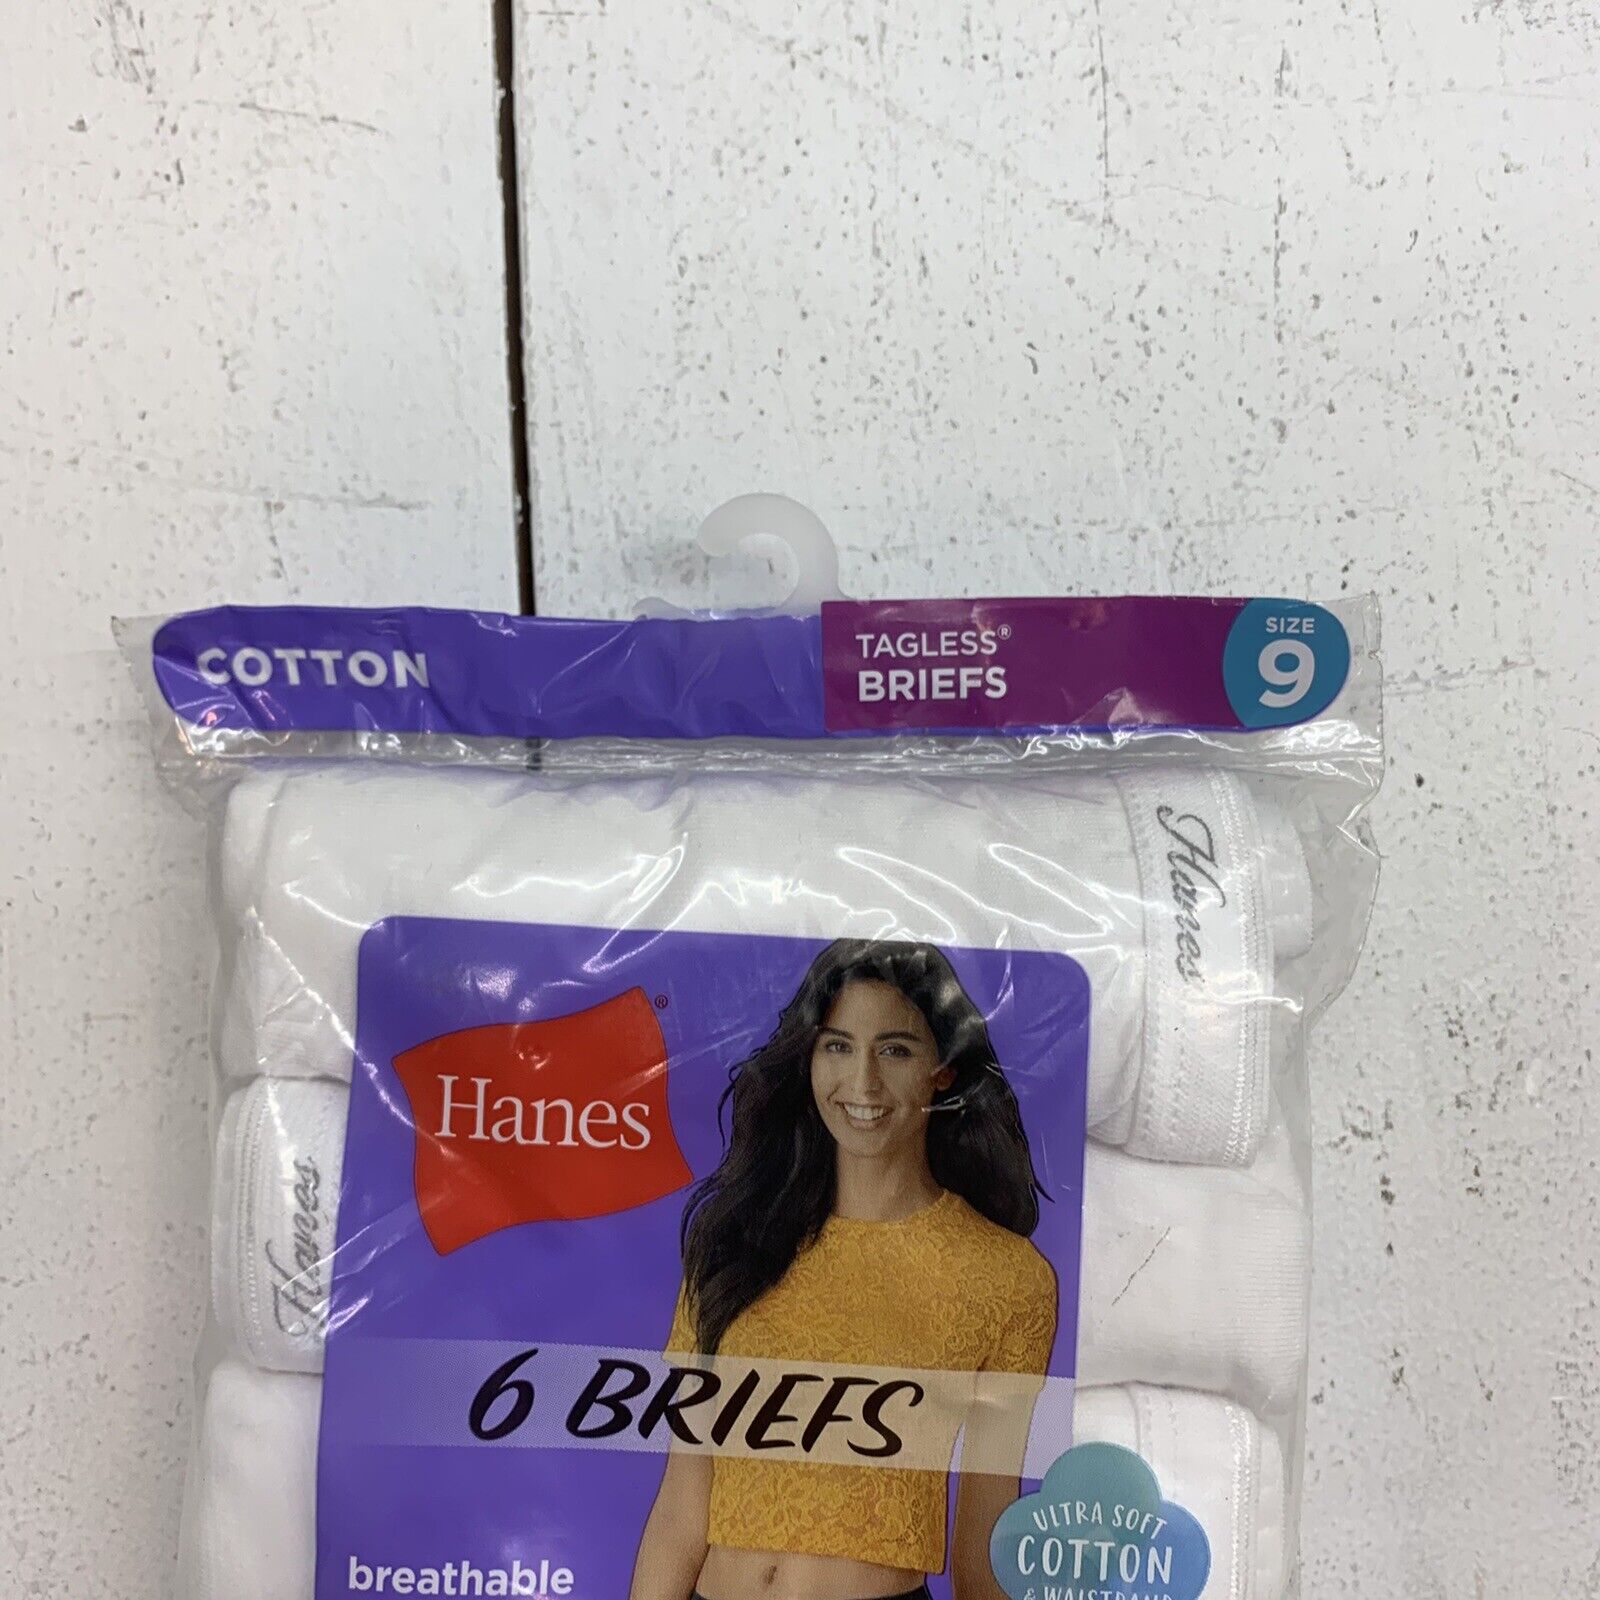 Women's White Cotton Brief Panties, 6 Pack